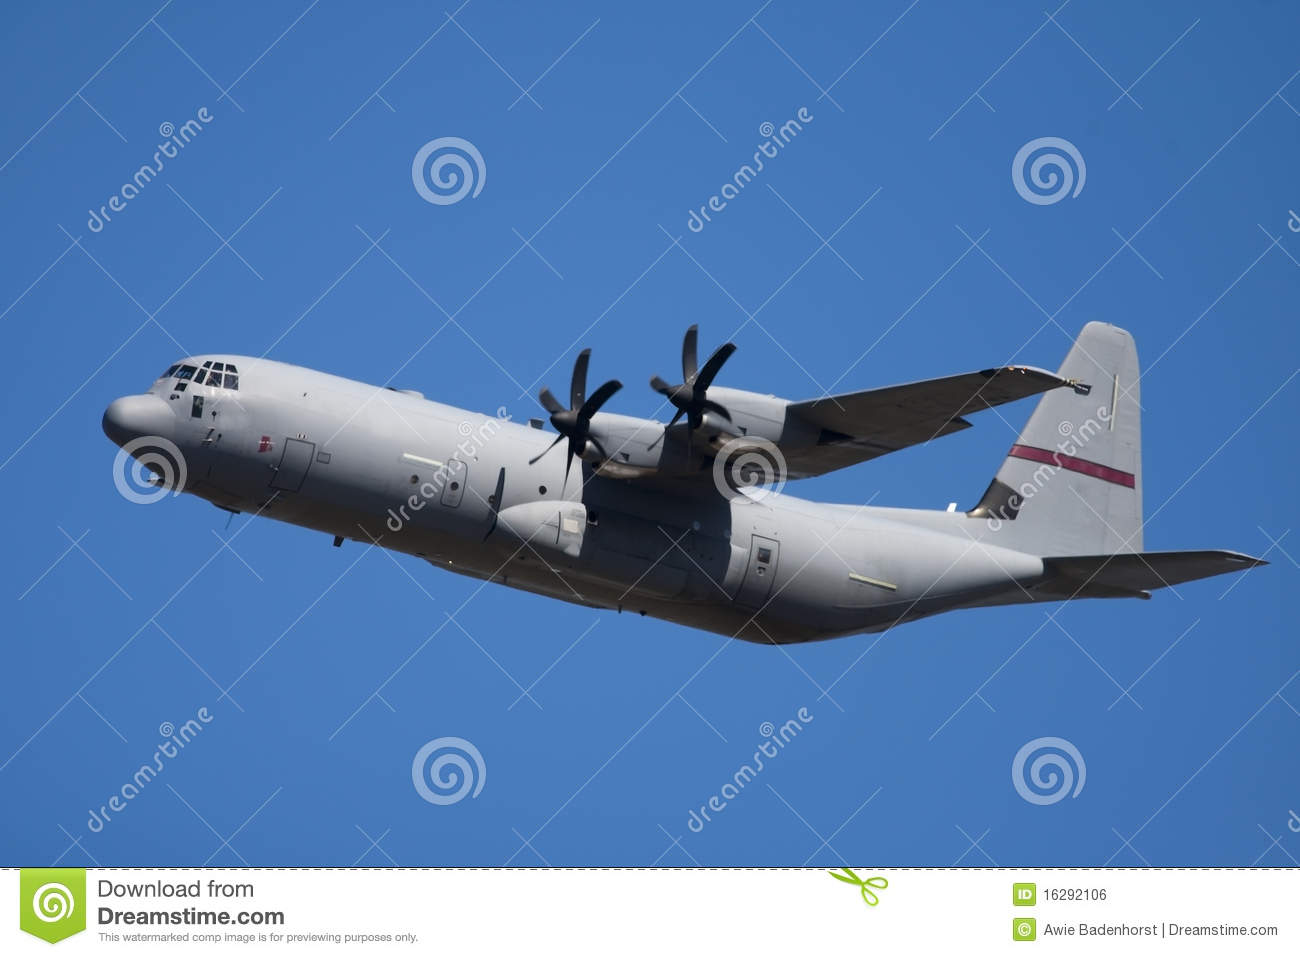 Lockheed Super Hercules Royalty Free Stock Image   Image  16292106